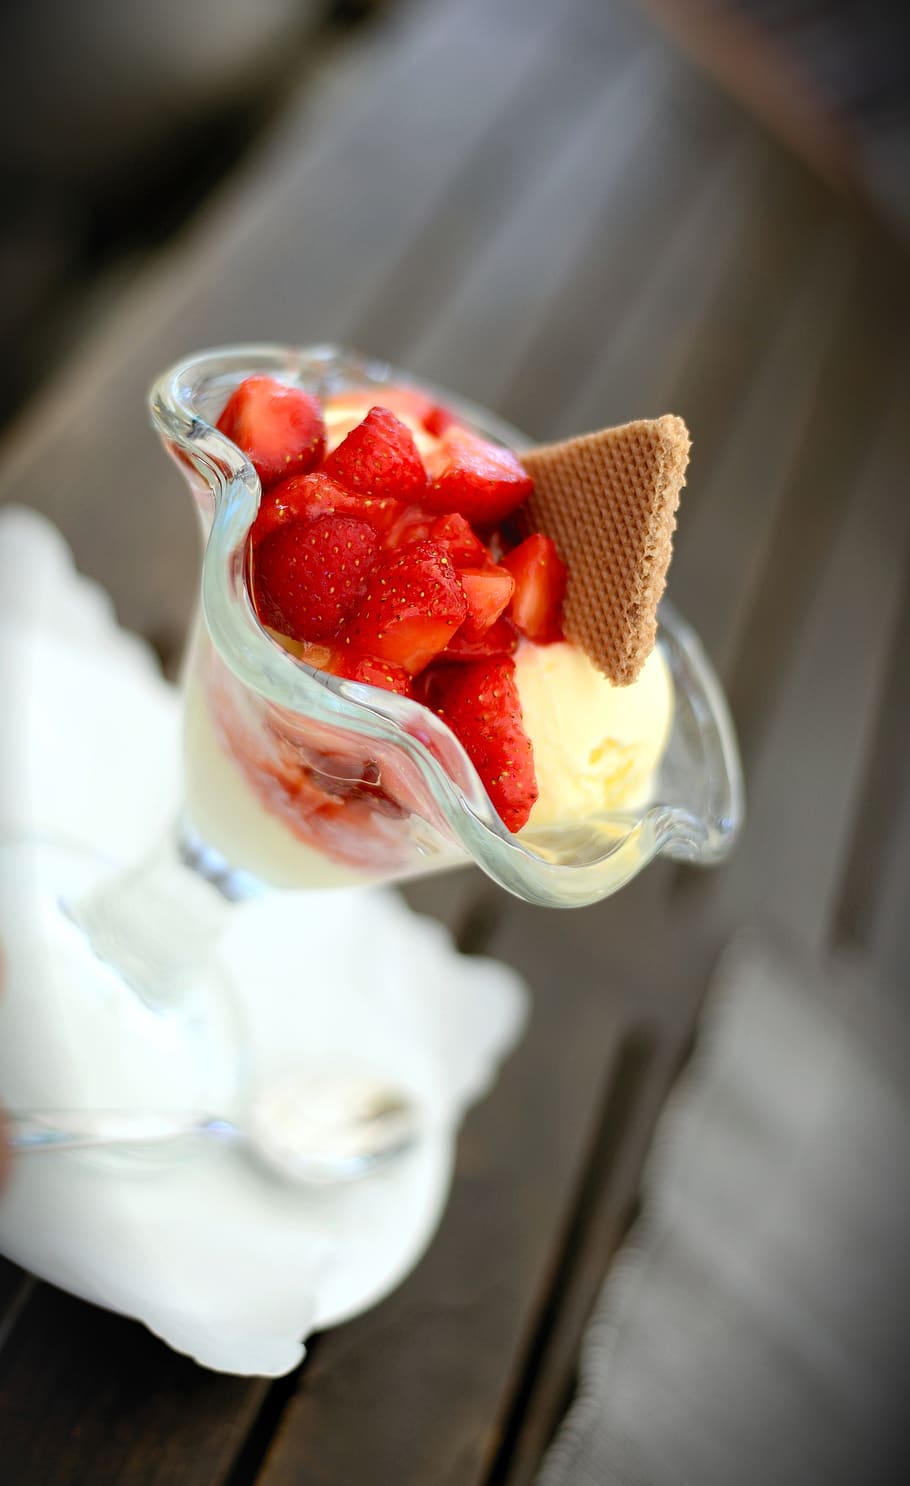 ice cream sundae, strawberry cup, ice cream, strawberries, vanilla ice cream, dessert, sweet, summer, waffle, glass